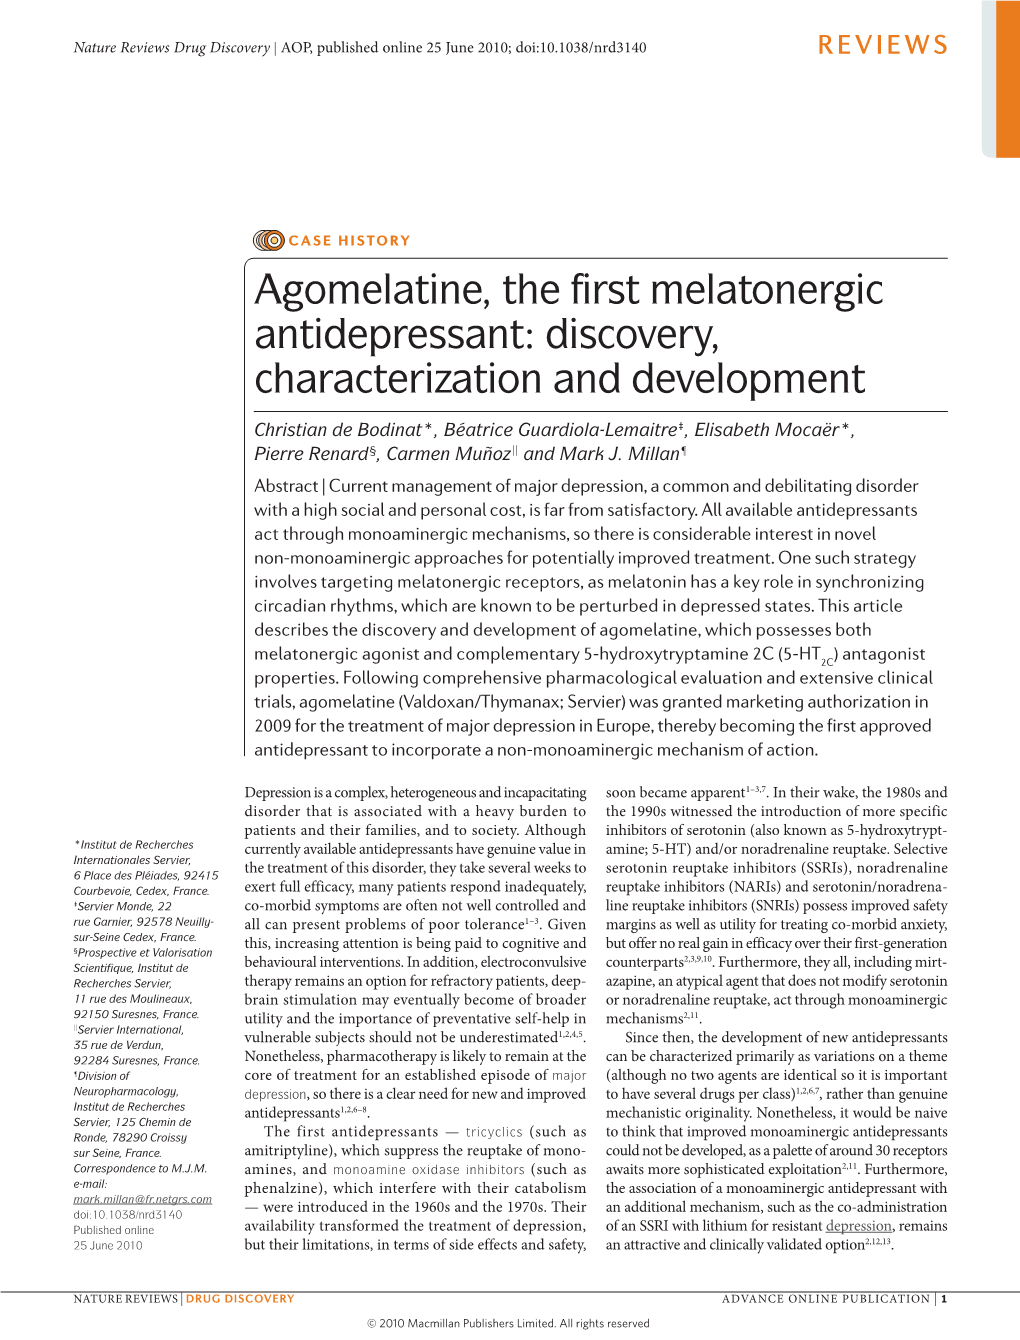 Agomelatine, the First Melatonergic Antidepressant: Discovery, Characterization and Development